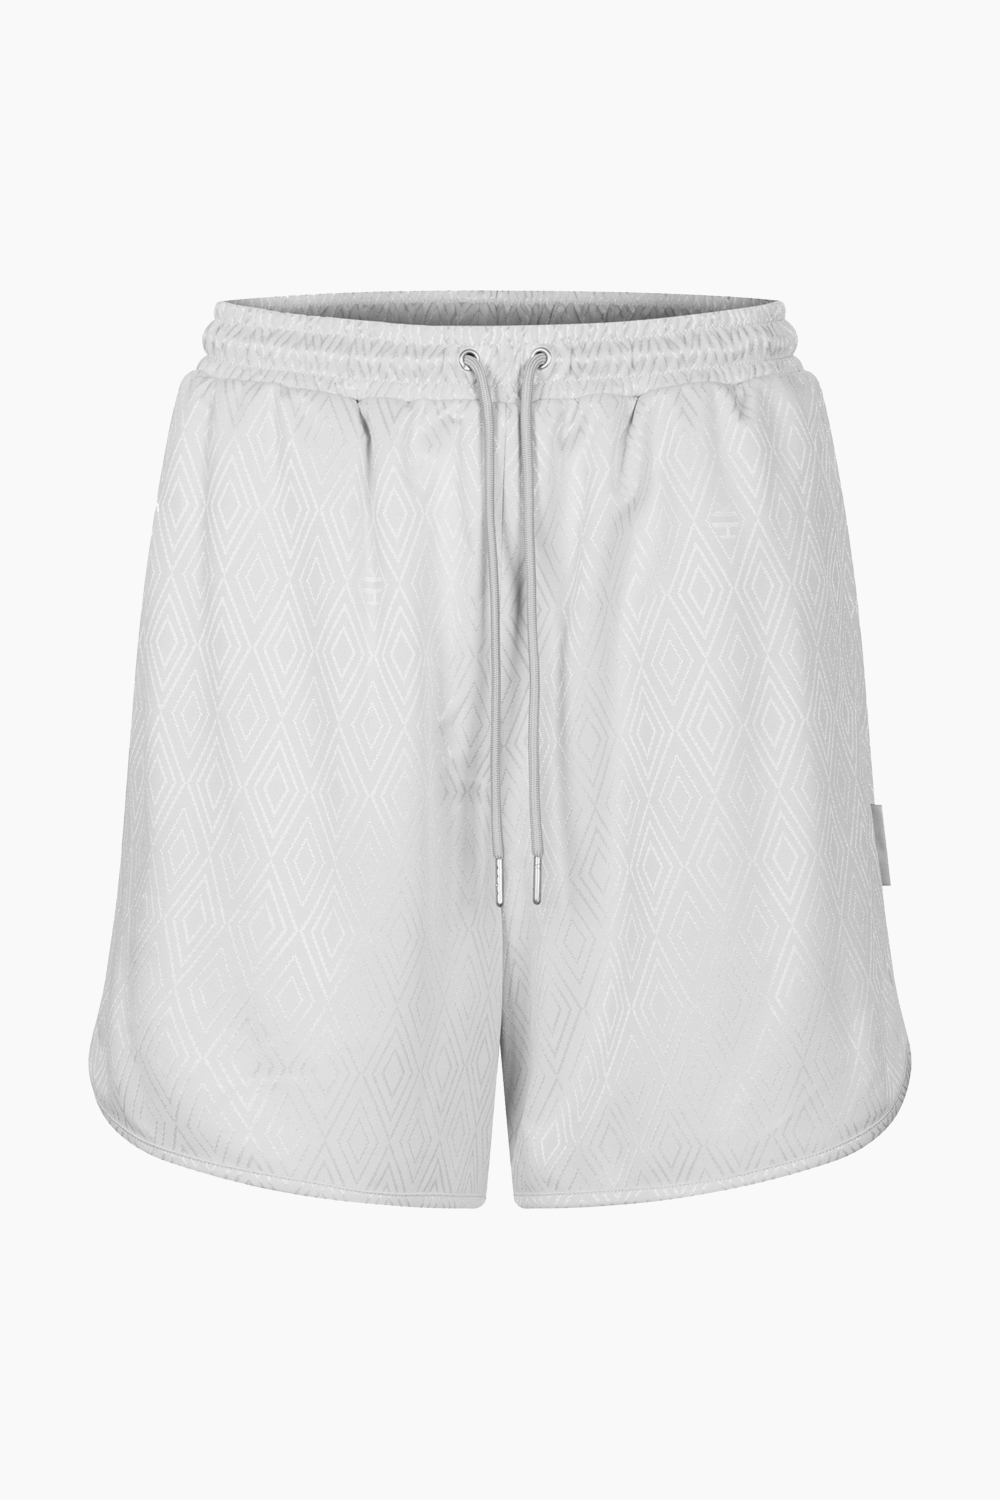 Sport Shorts - Grey - Han Kjøbenhavn - Grå S